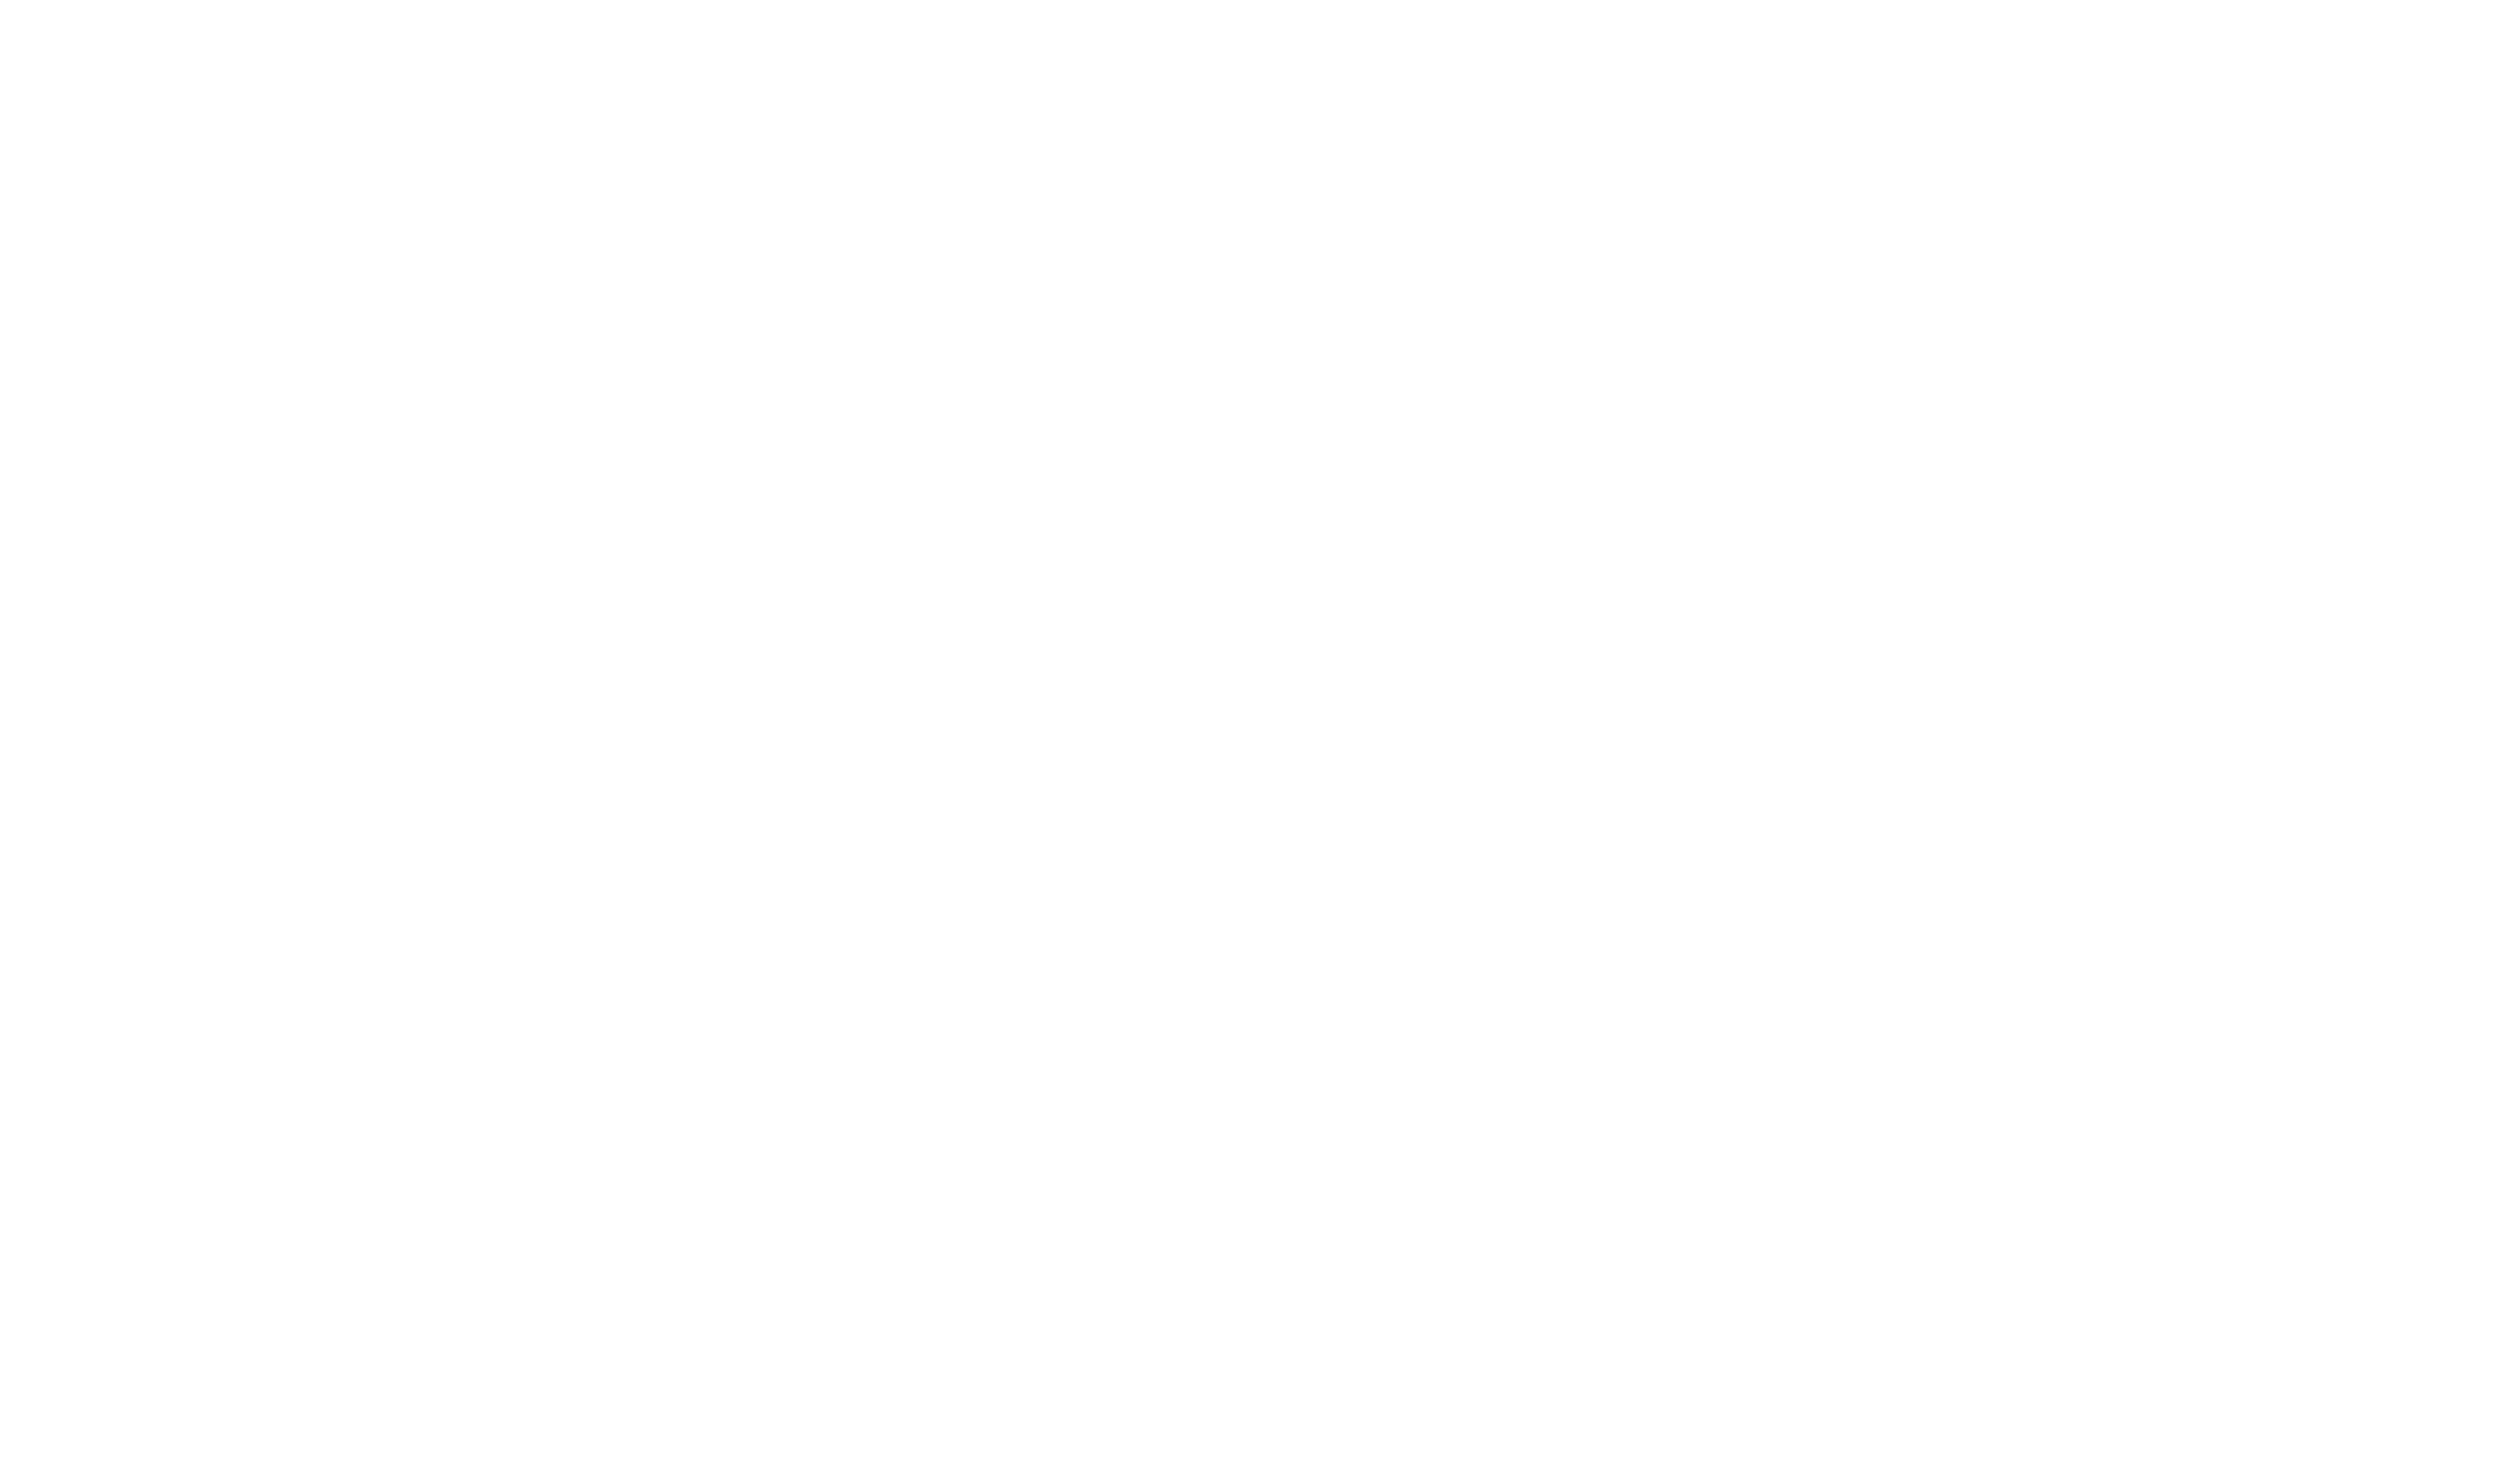 Saudi Arabian Hot Air Ballooning Federation